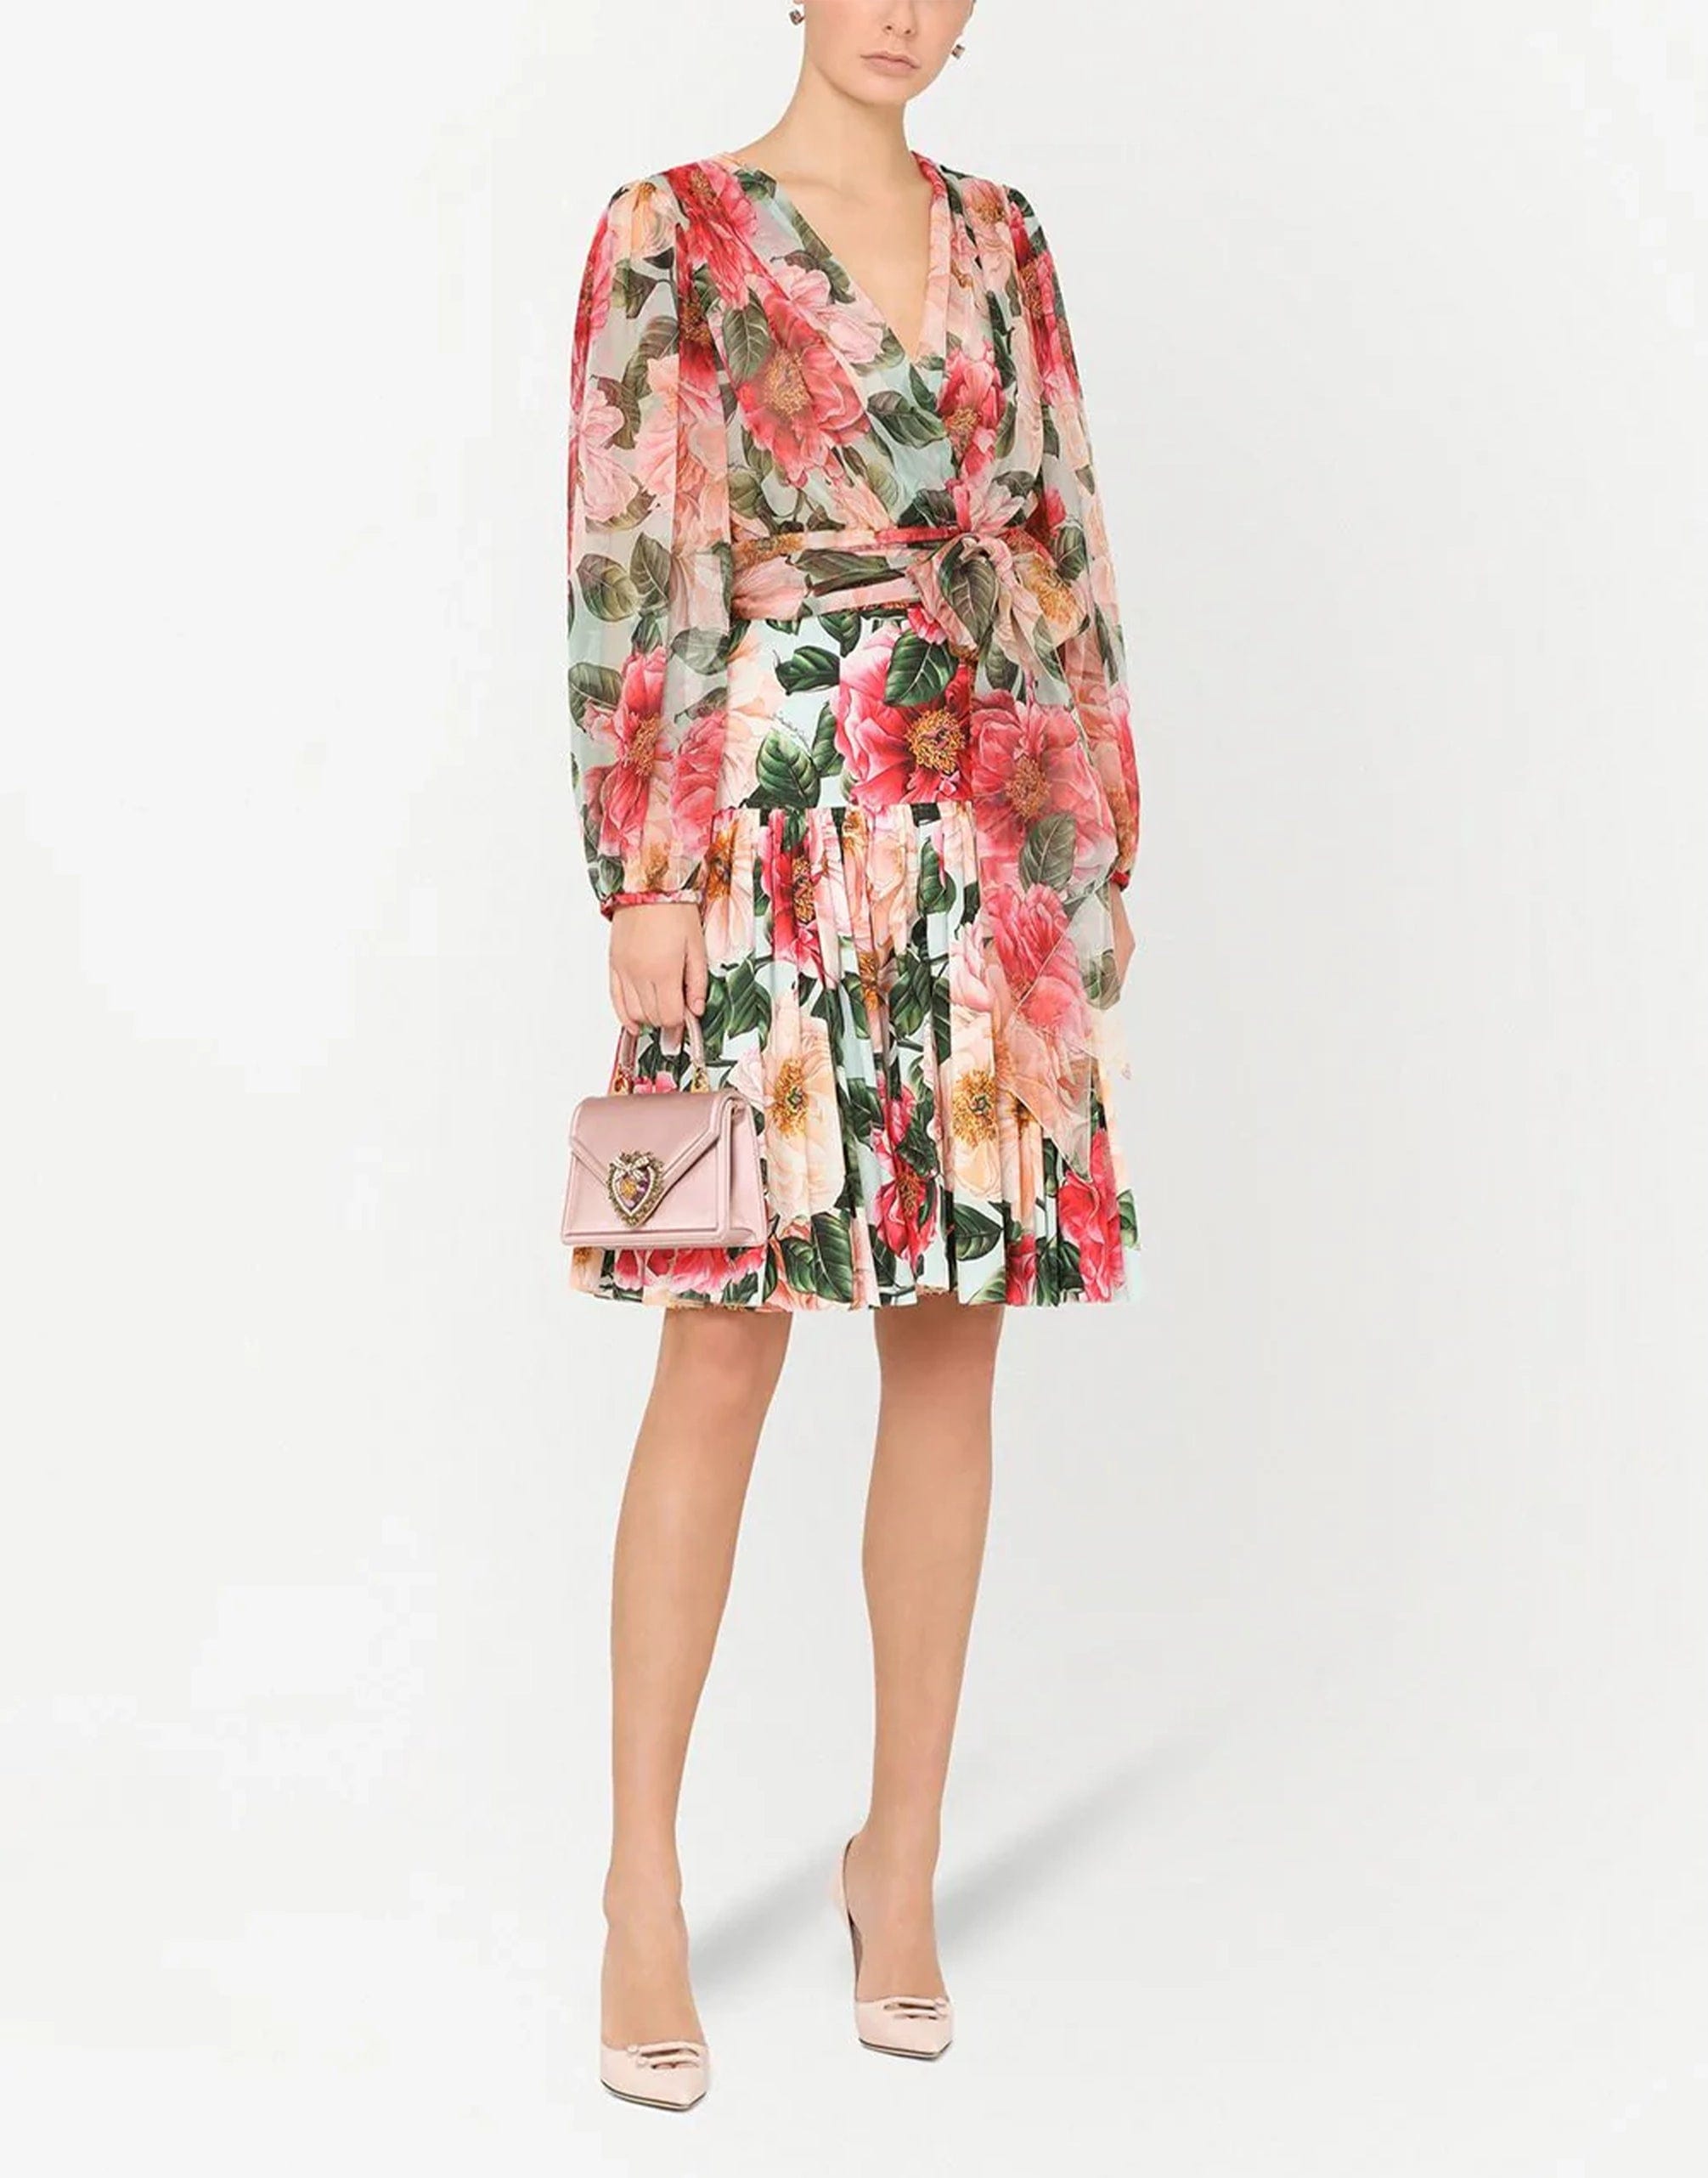 Dolce & Gabbana Floral-Print Pleated Skirt